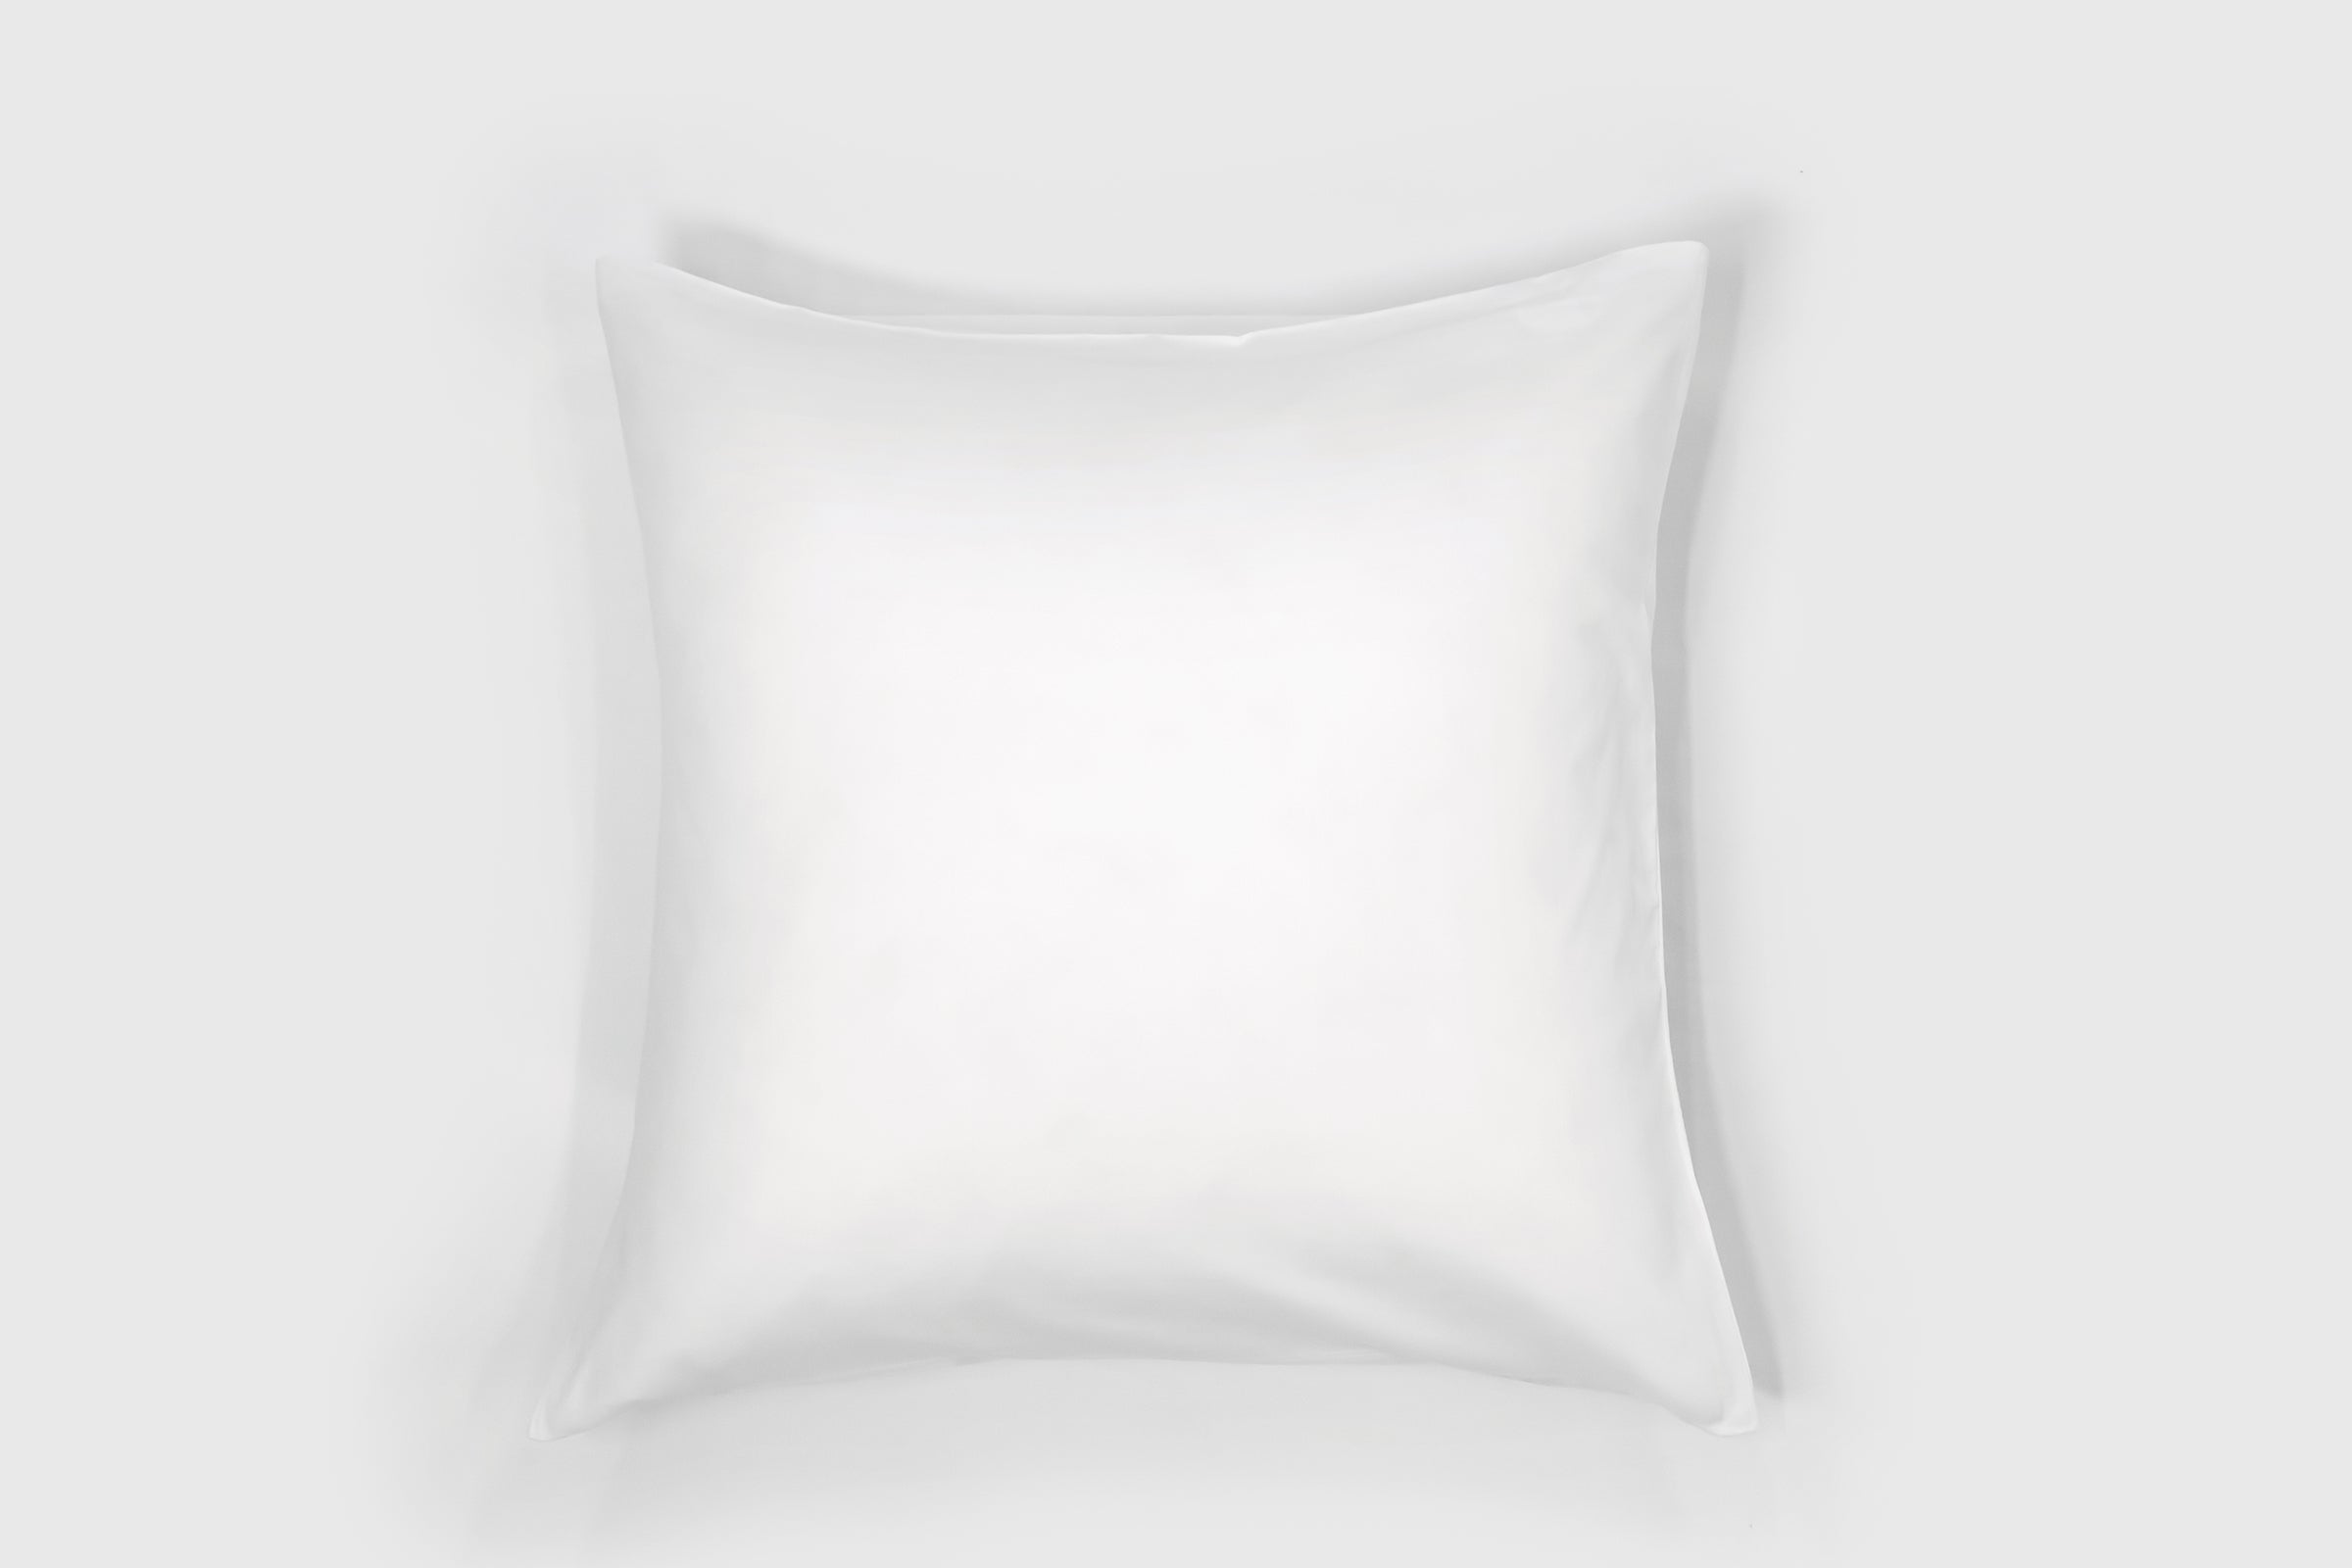 classic-white-euro-sham-pillowcase-pair-by-sojao.jpg